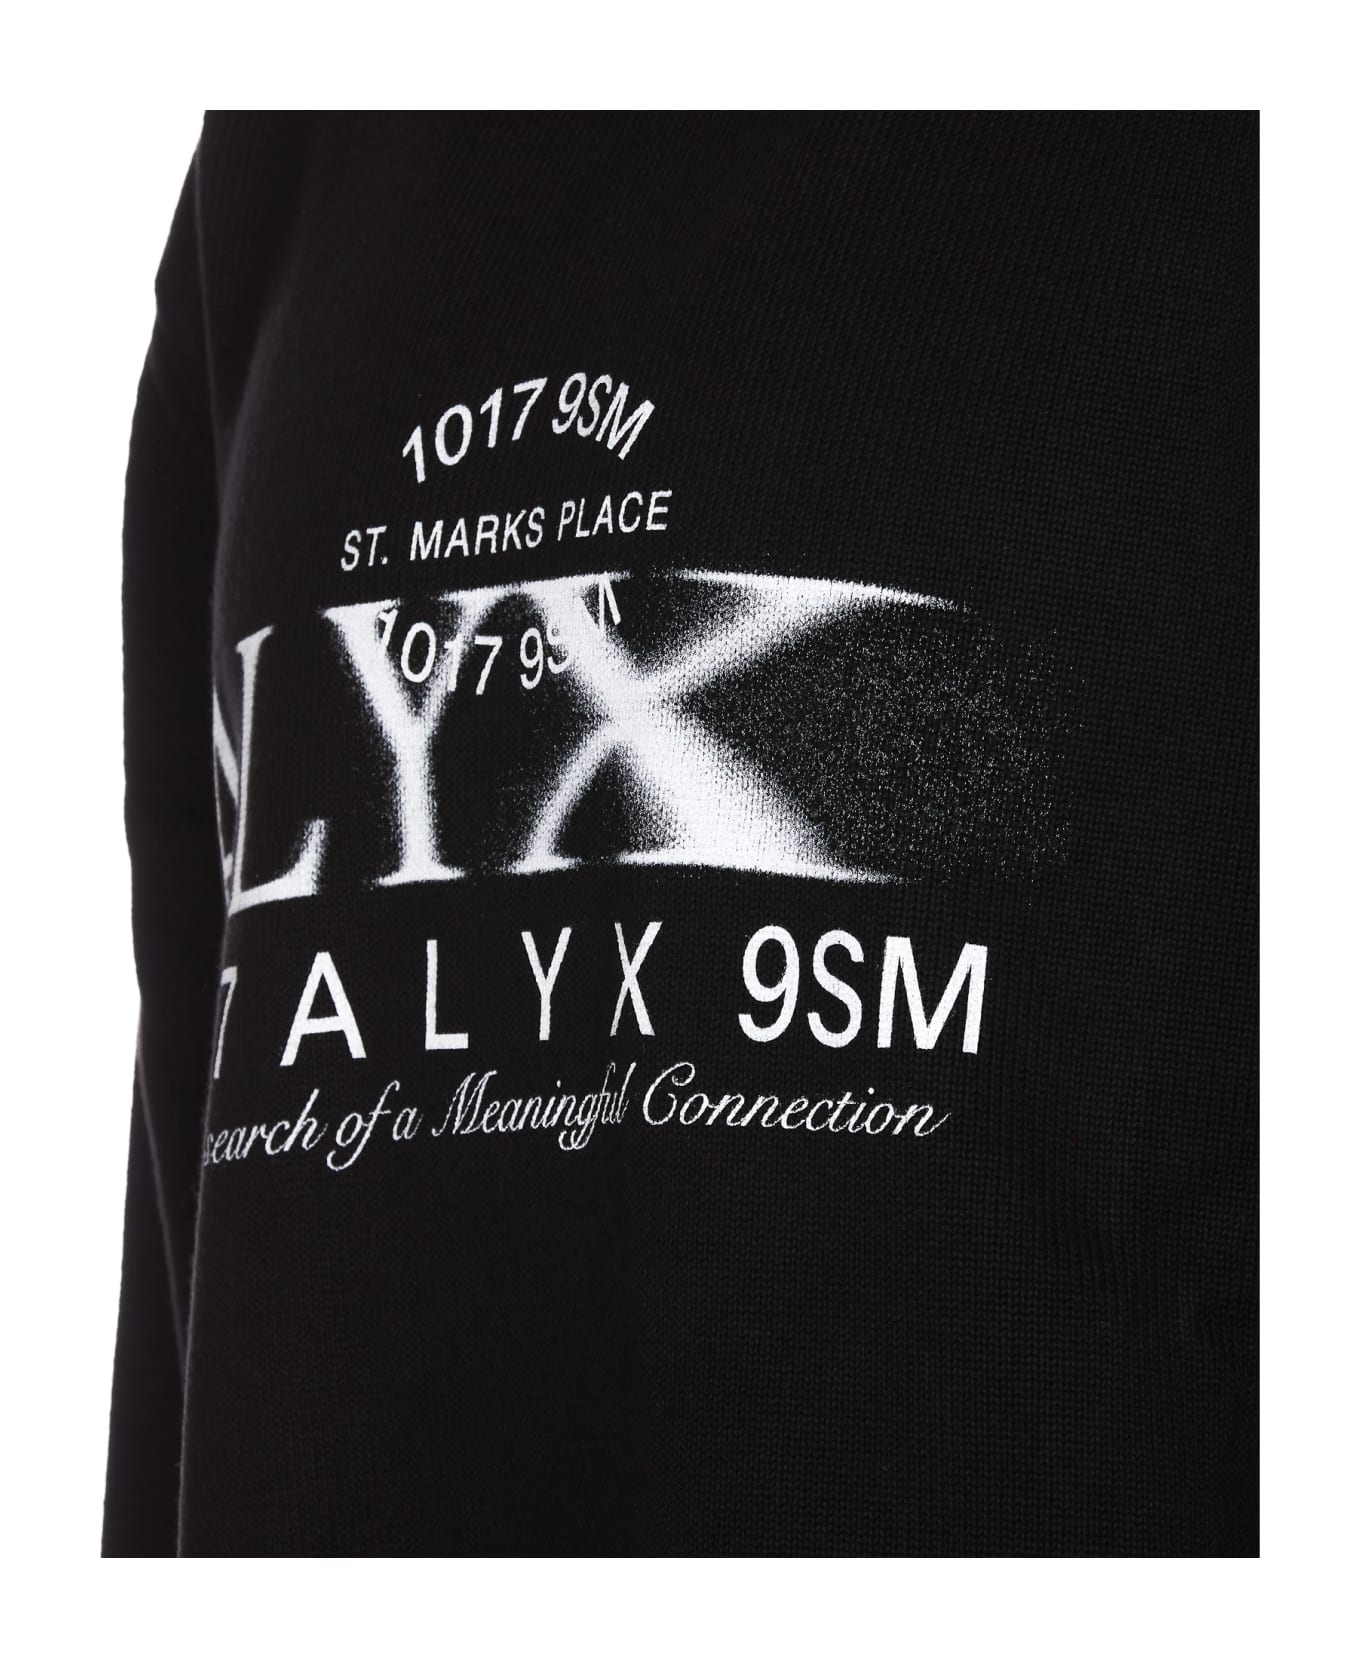 1017 ALYX 9SM Printed Cotton Jumper - Black